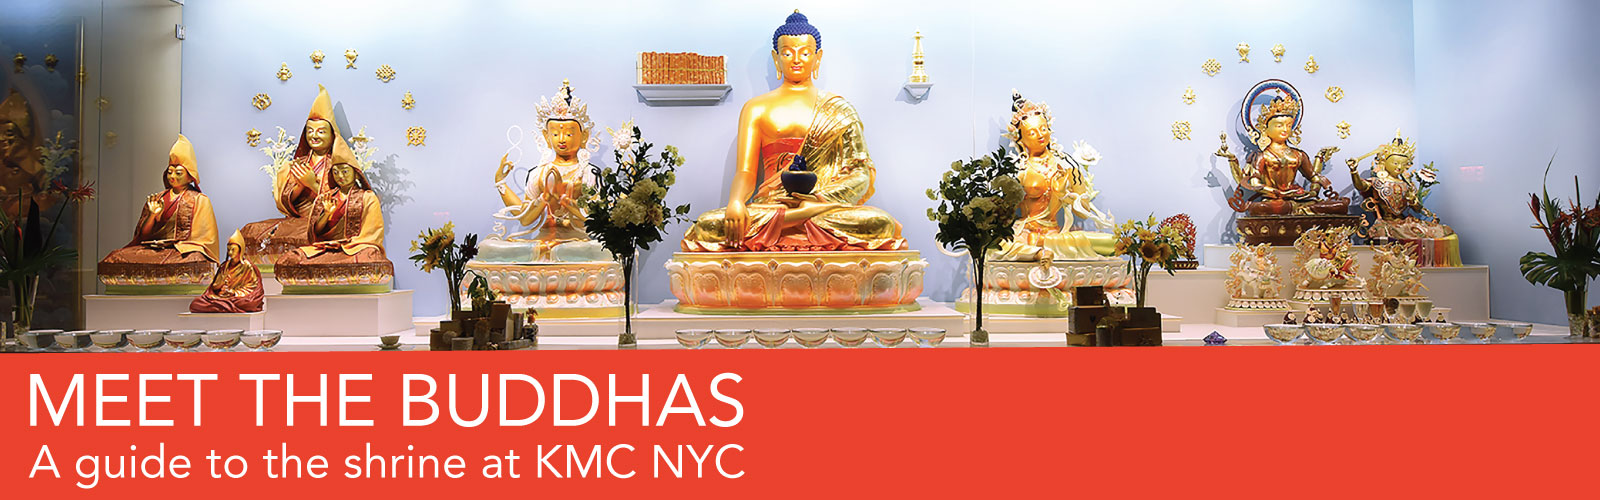 kadampa-nyc-meditation-room-shrine-buddhas